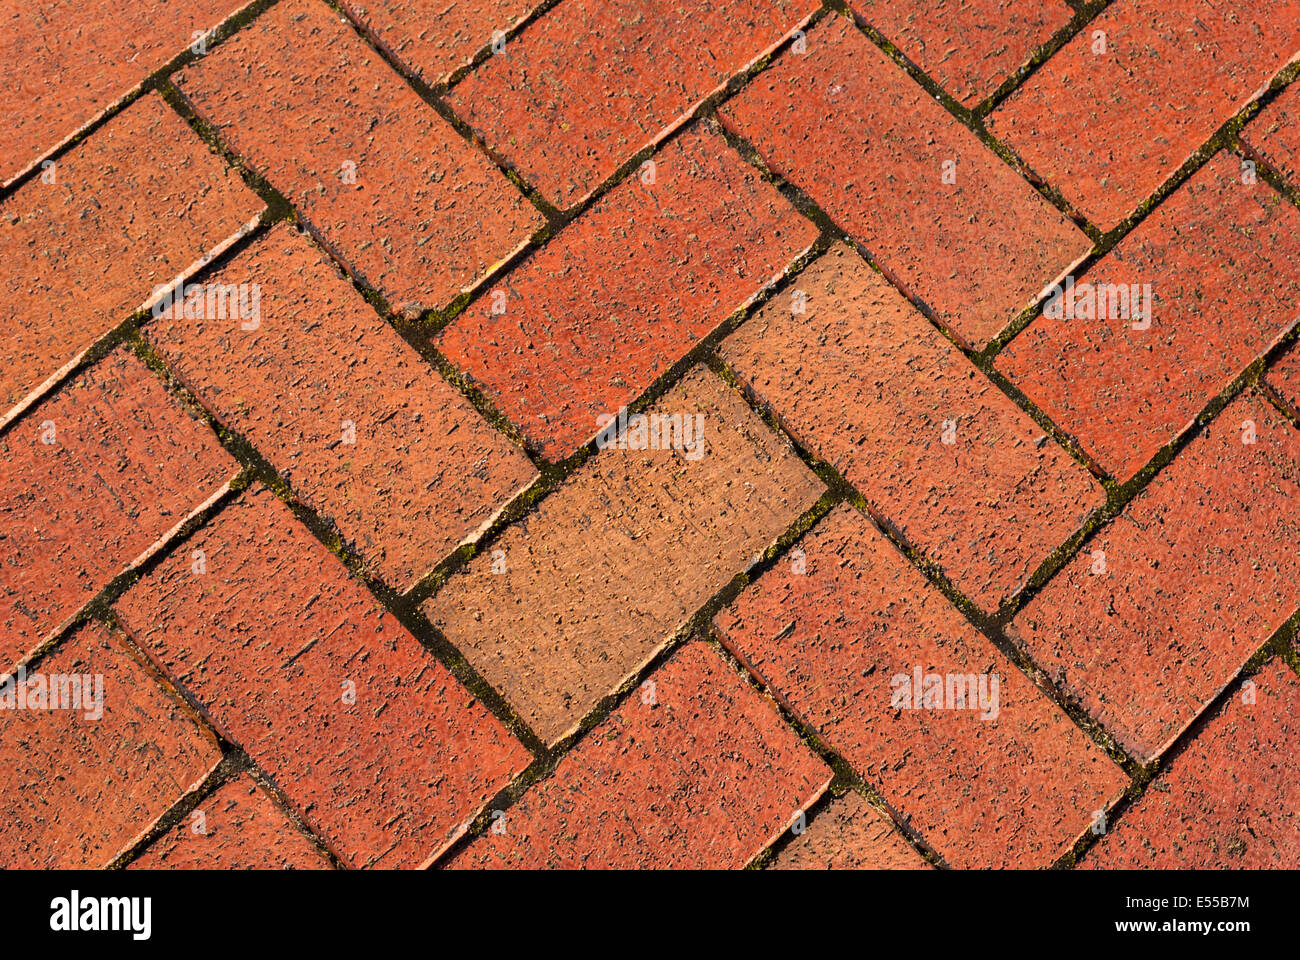 Parquet Brickwork flooring Stock Photo